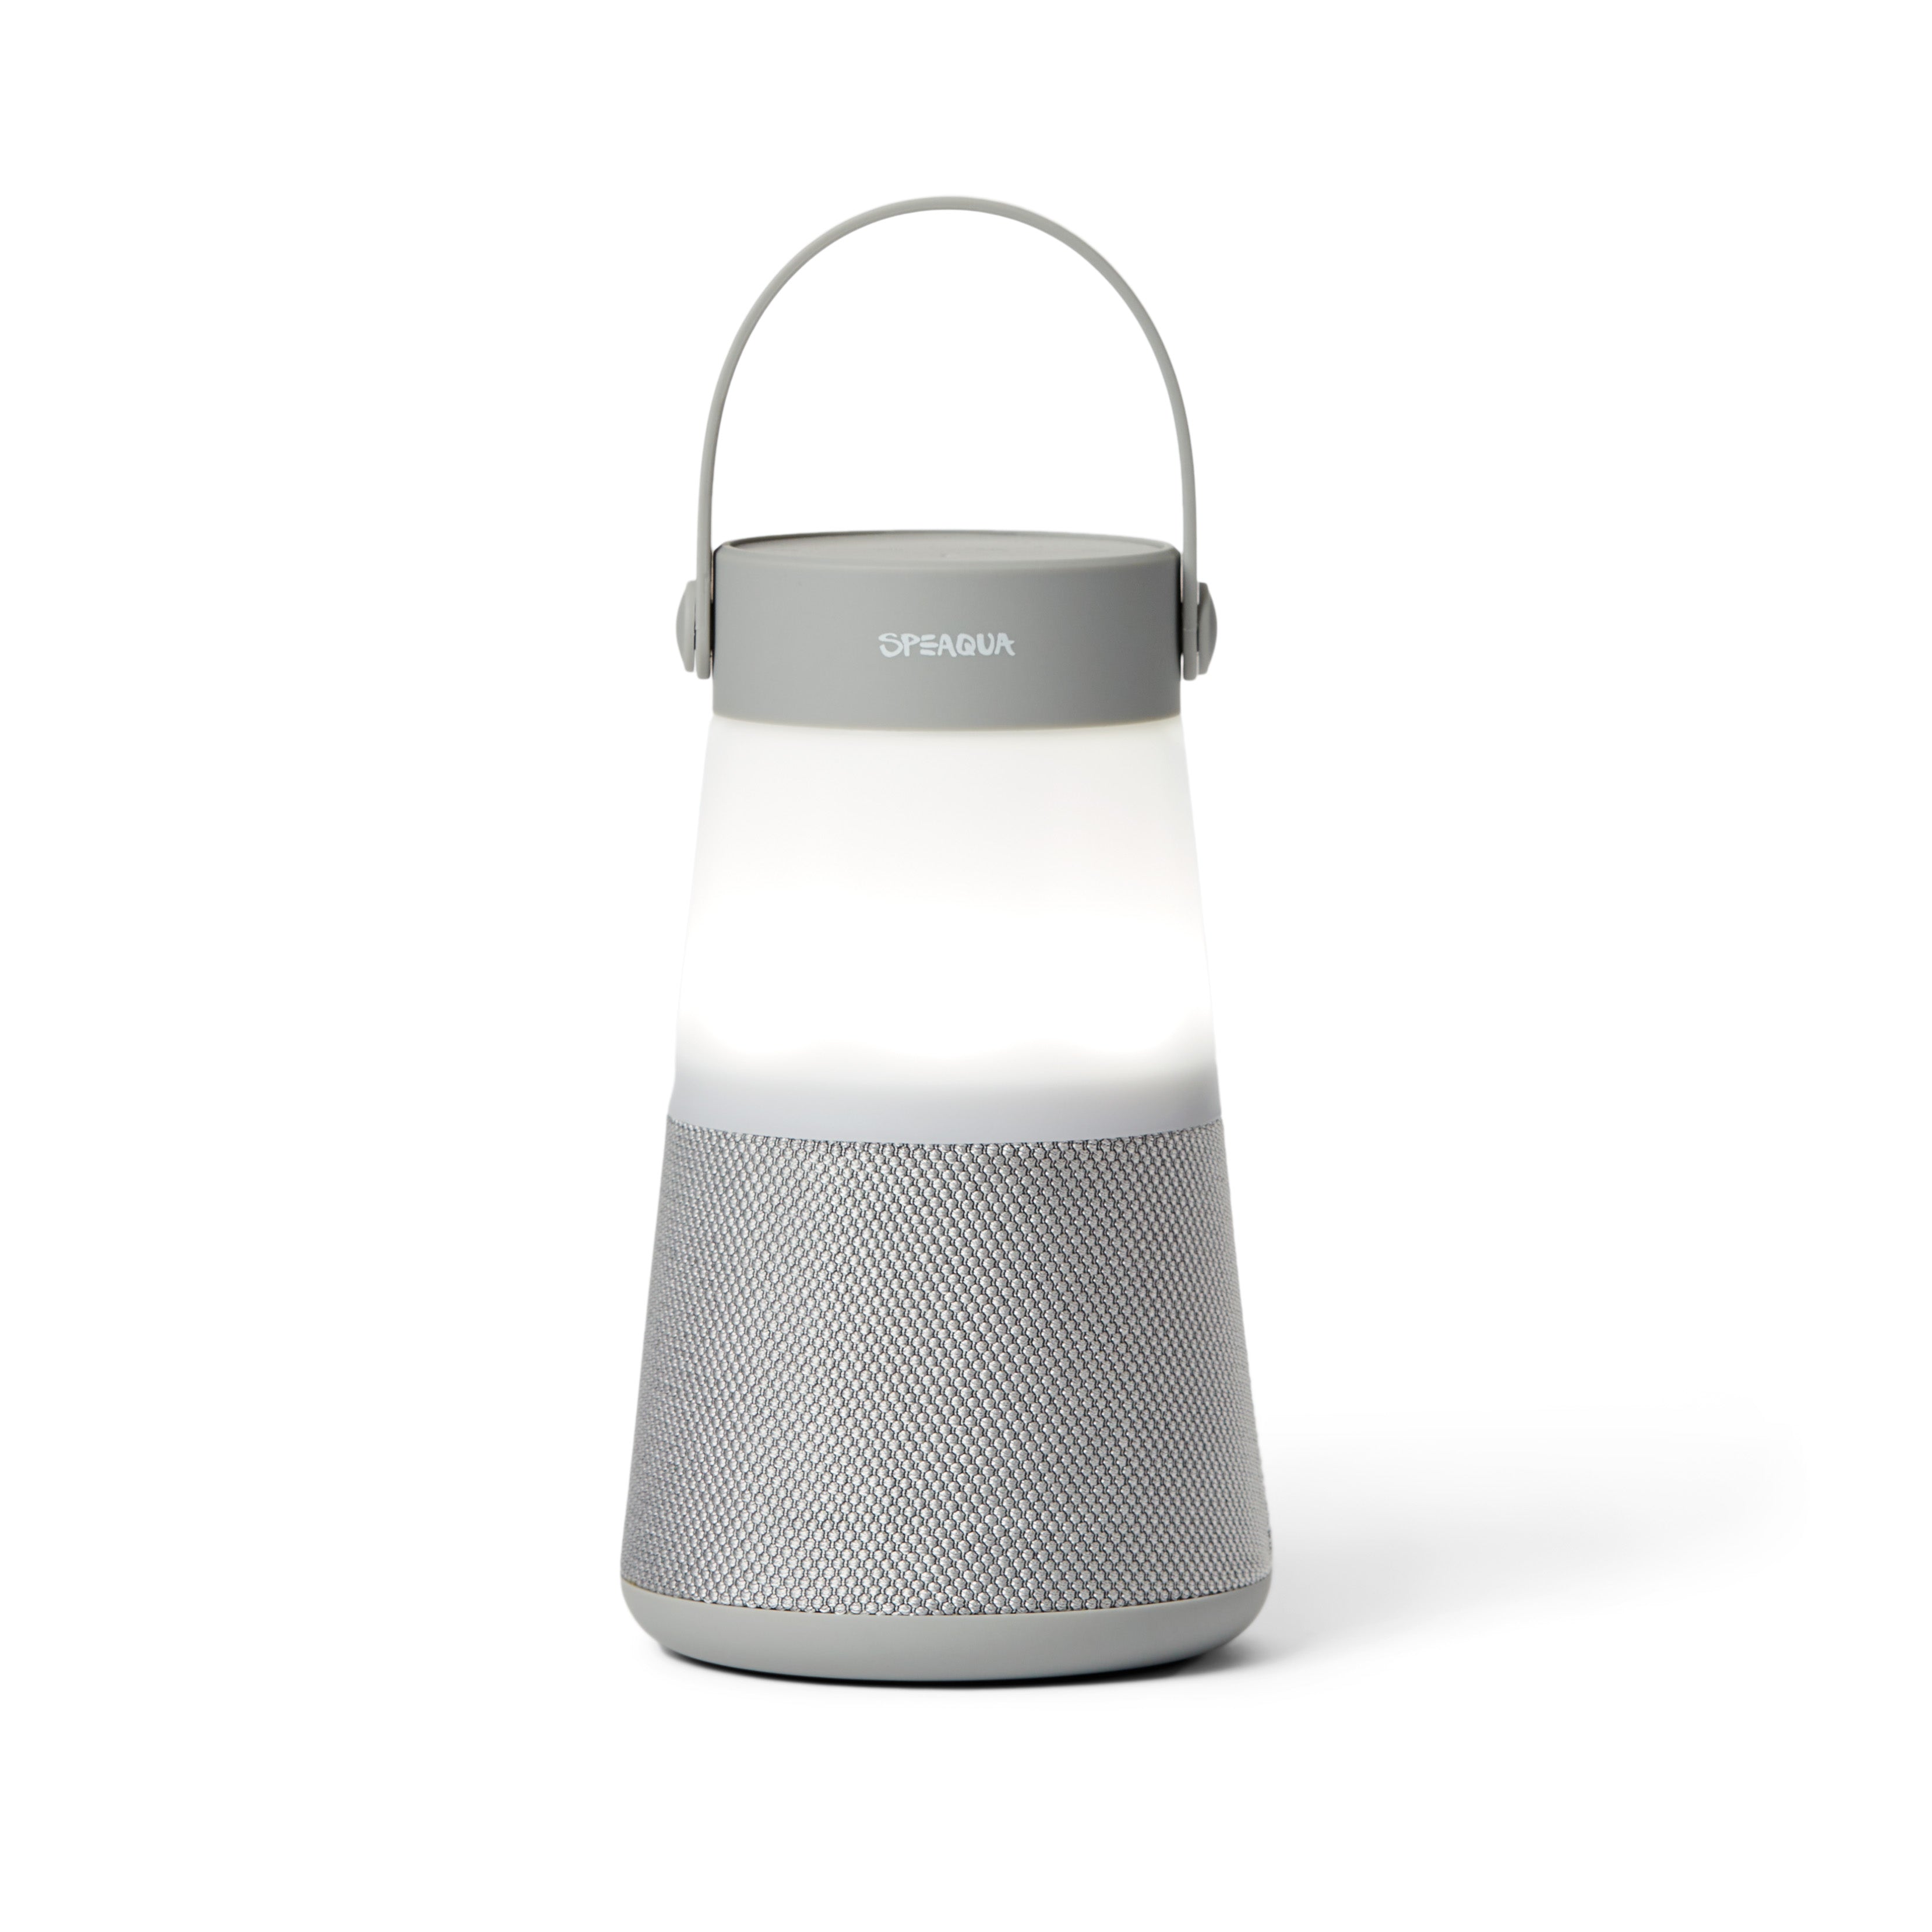 The Lantern Speaker – Speaqua